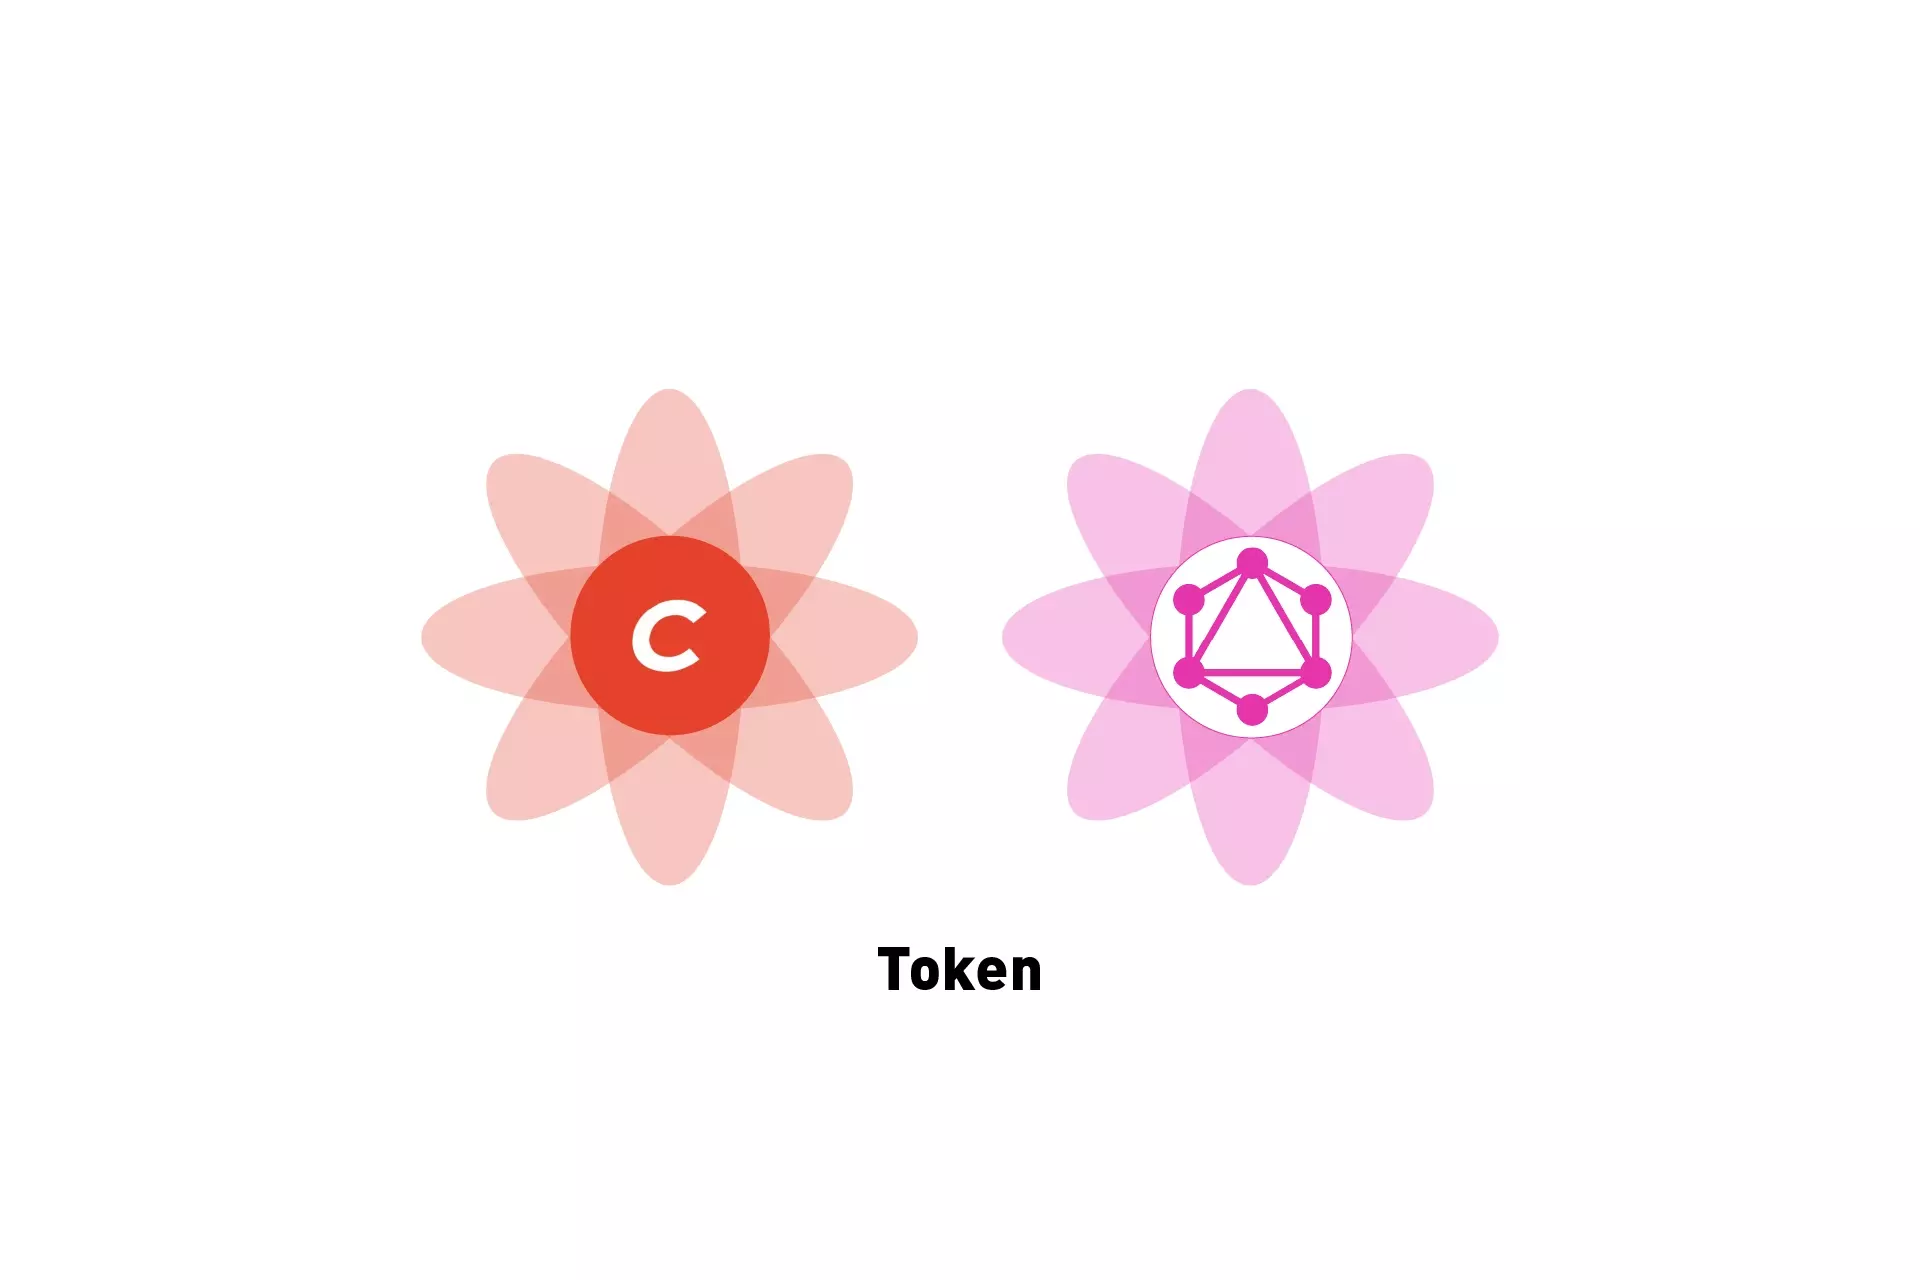 A flower that represents Craft CMS next to a flower that represents GraphQL. Beneath it sits the text "Token."